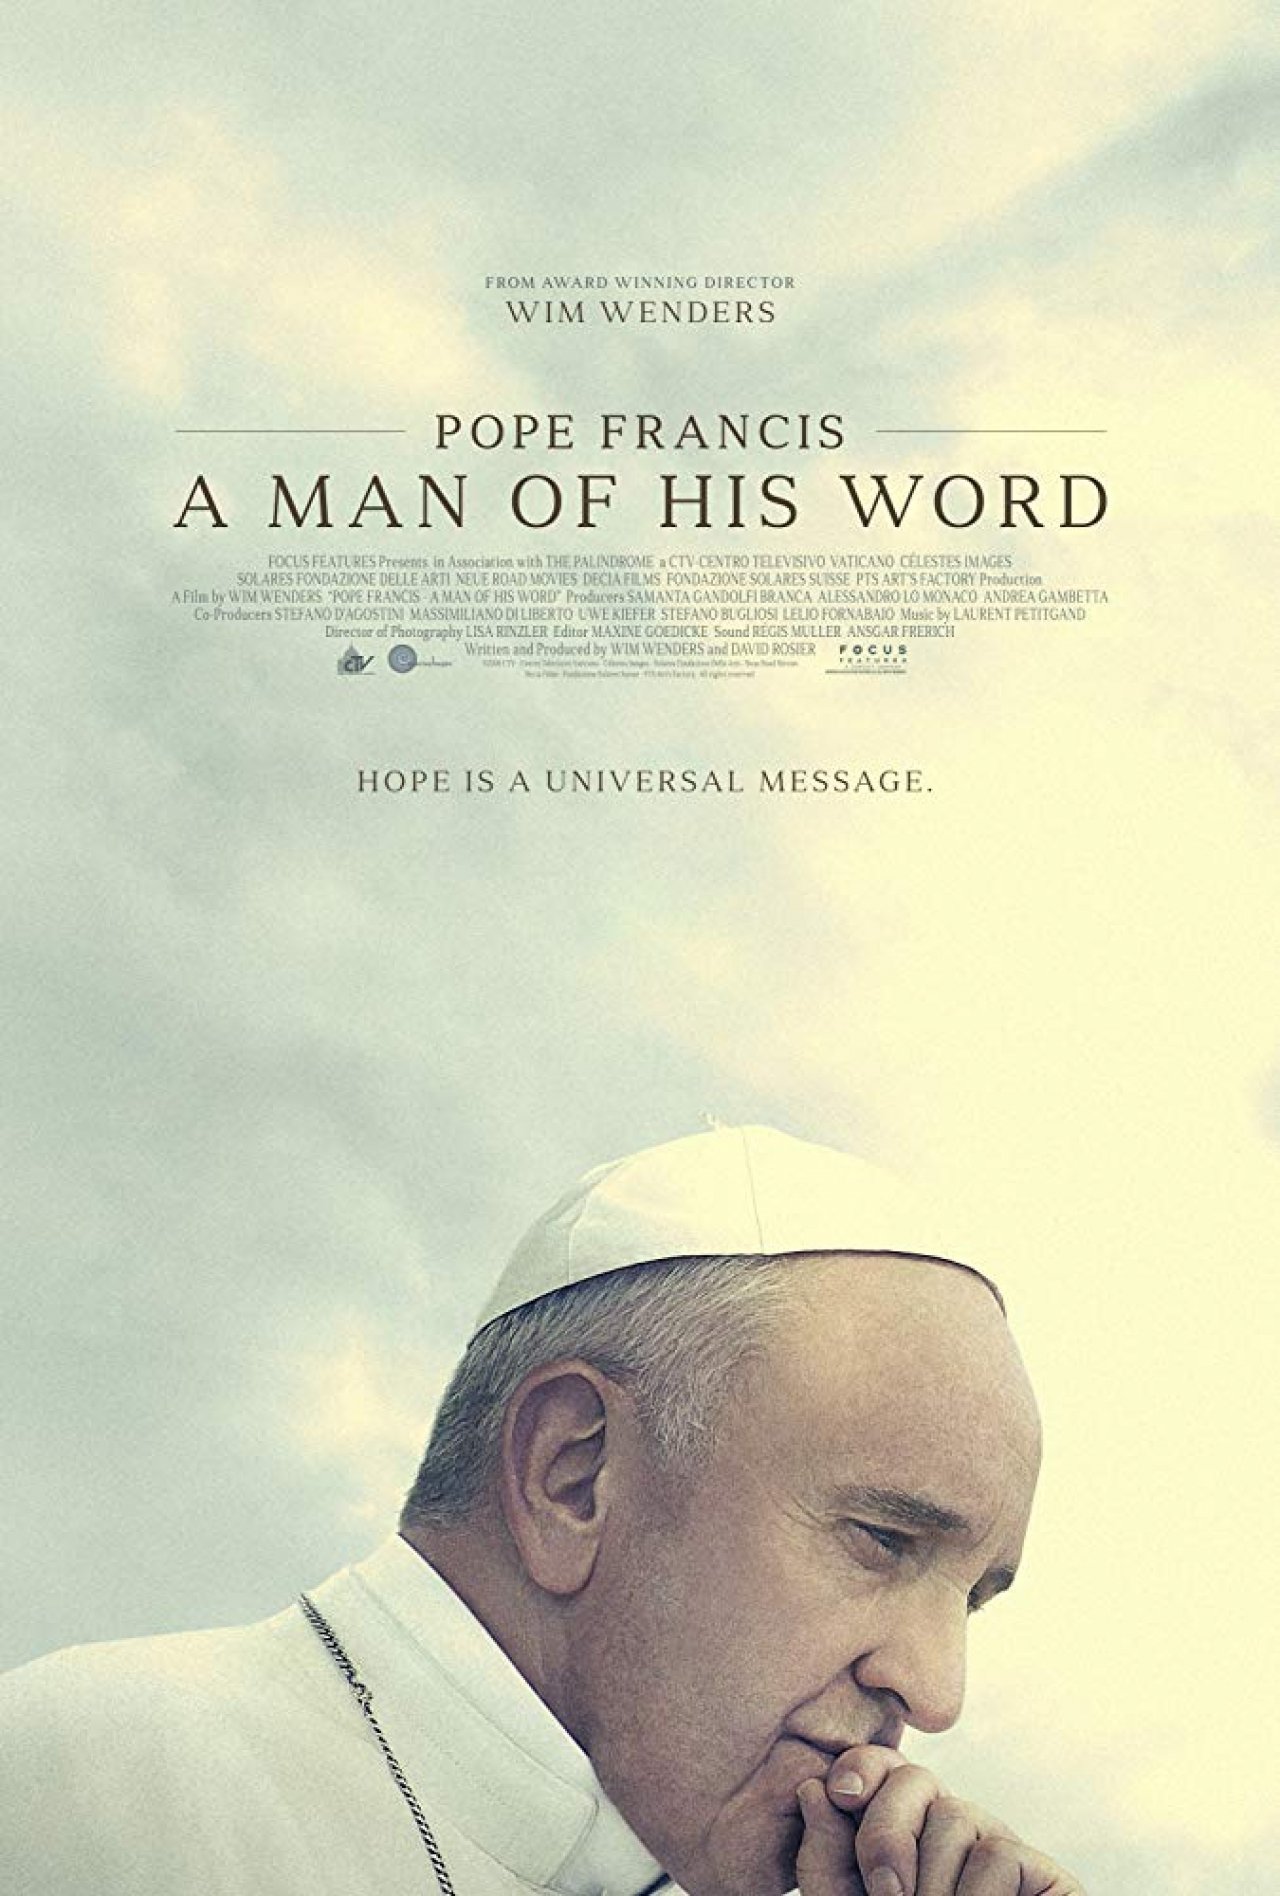 HAFTANIN FİLMİ PAPA FRANCESCO (POPE FRANCIS: A MAN OF HIS WORD)